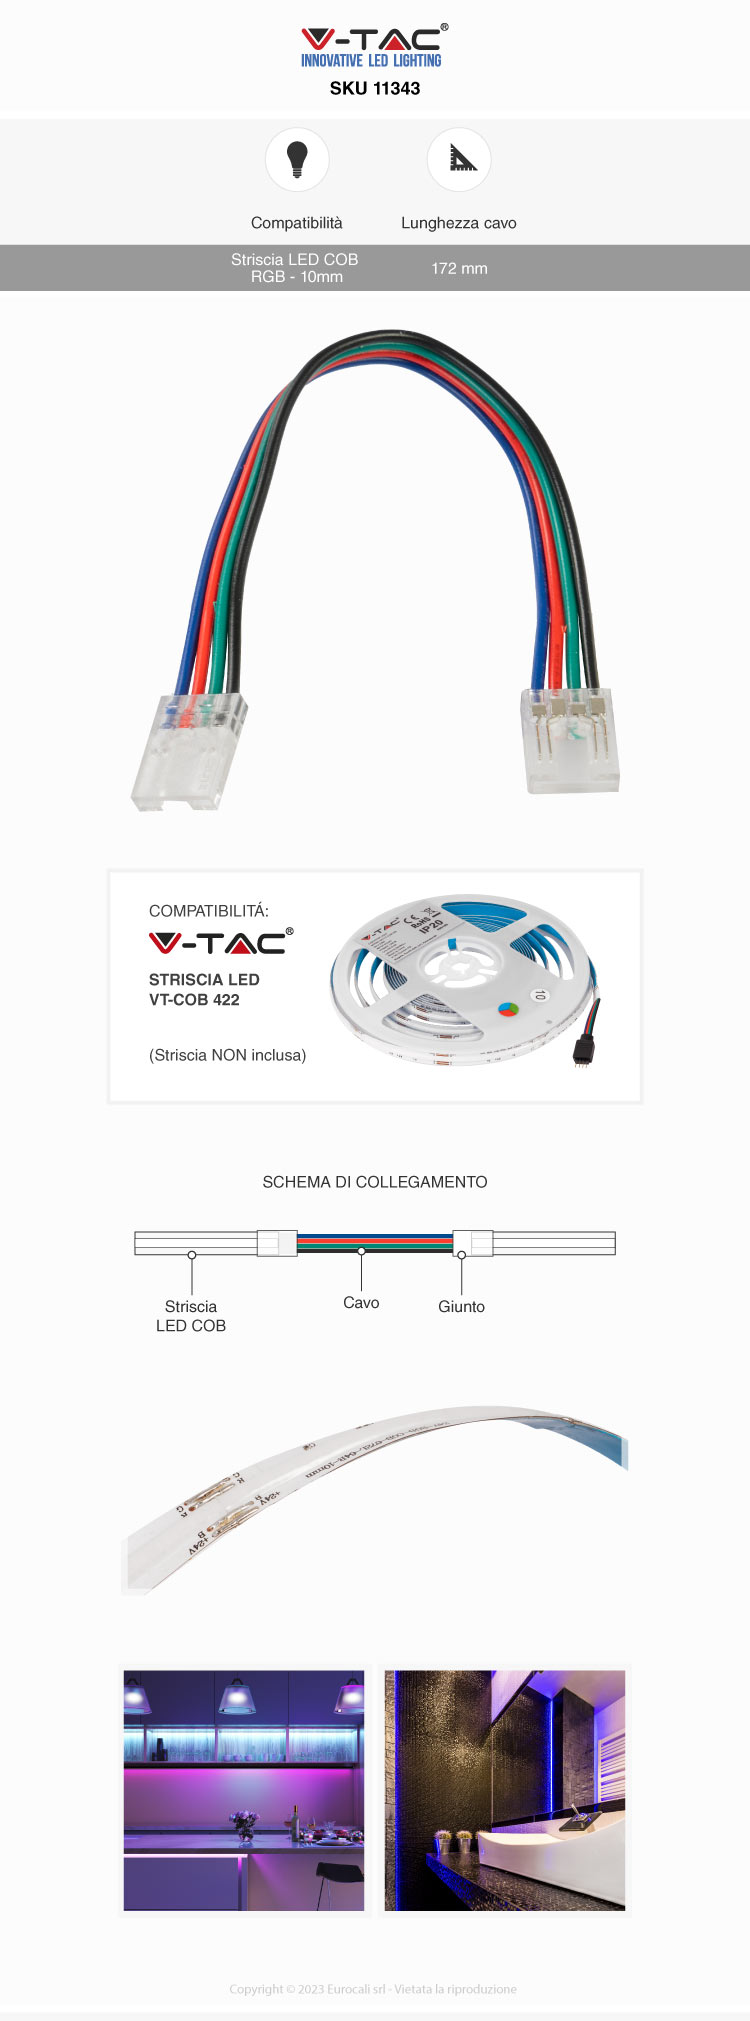 v-tac connettore intermedio flessibile per strisce led cob